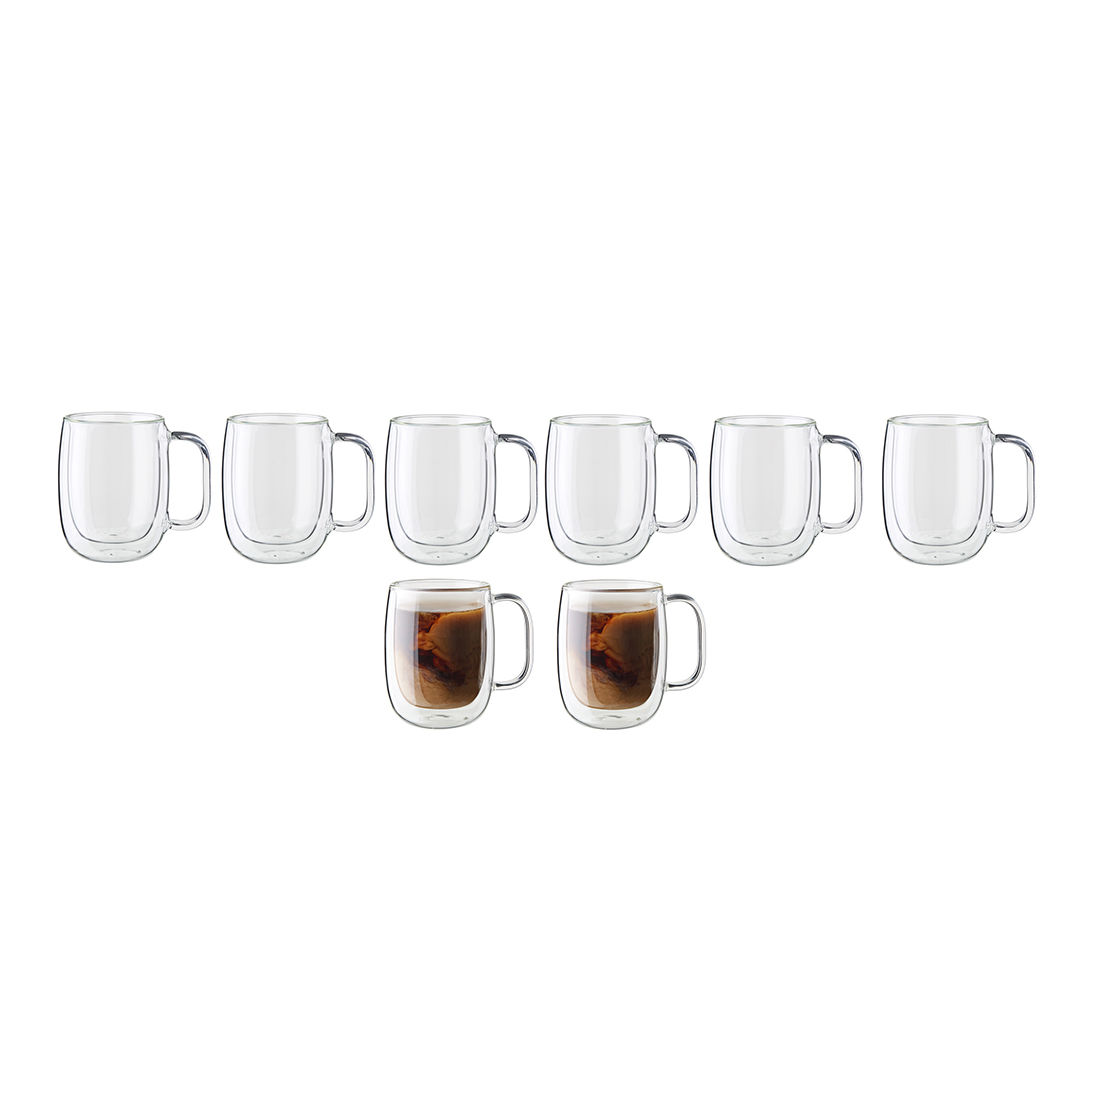 Zwilling Sorrento Plus Double Wall Glassware 2-pc, Cappuccino Glass Mug Set